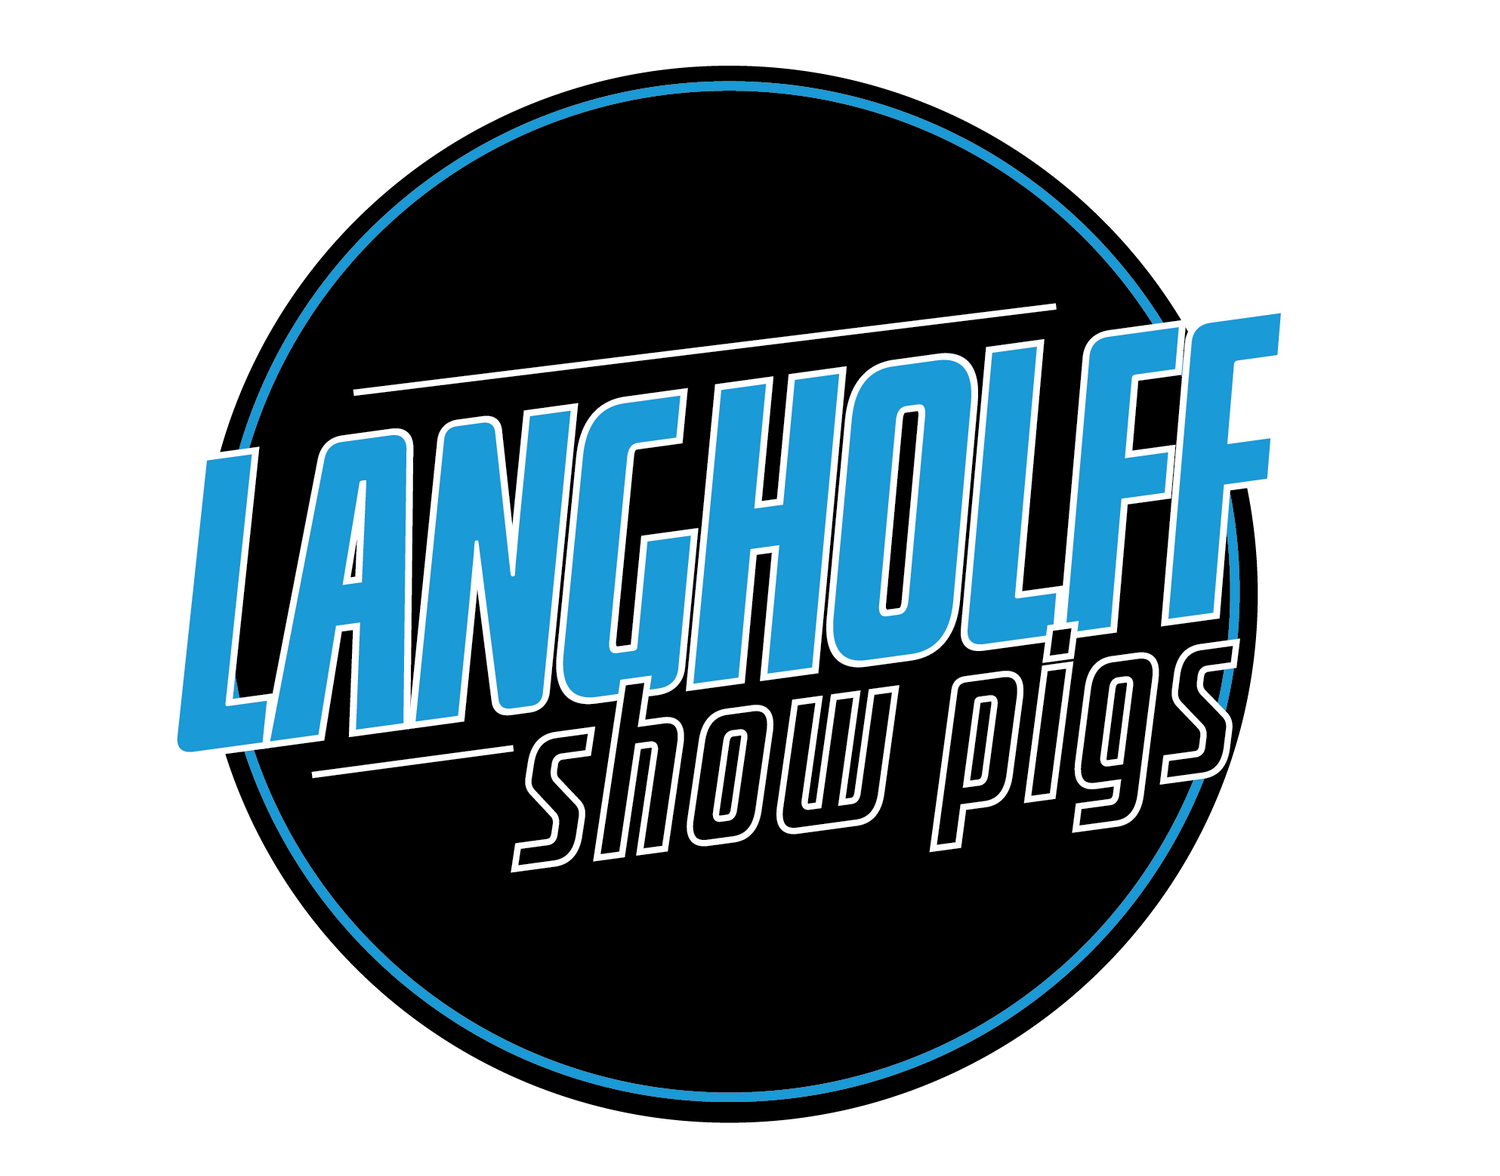 Langholff Show Pigs Online PRE-ORDER Apparel Store